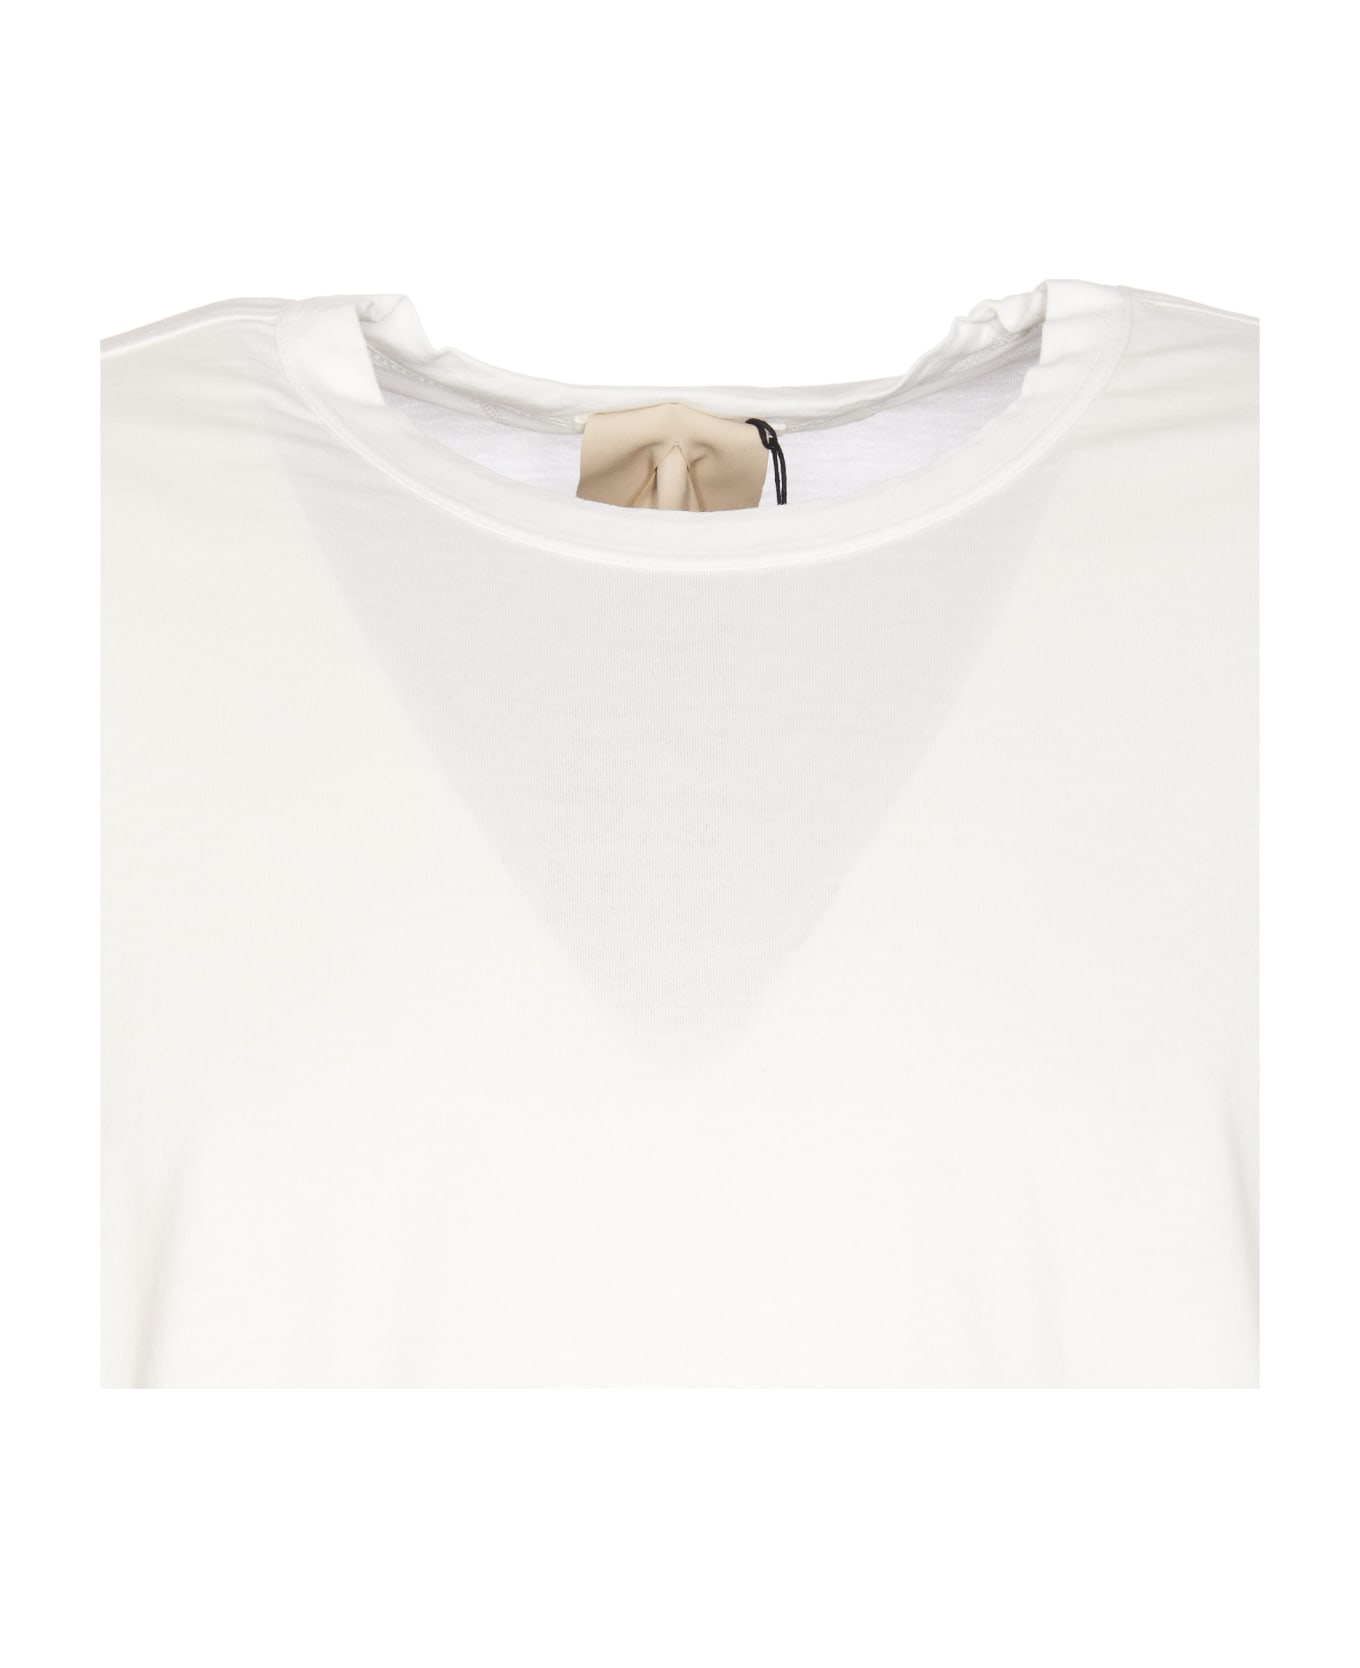 Ten C T-shirt - White シャツ